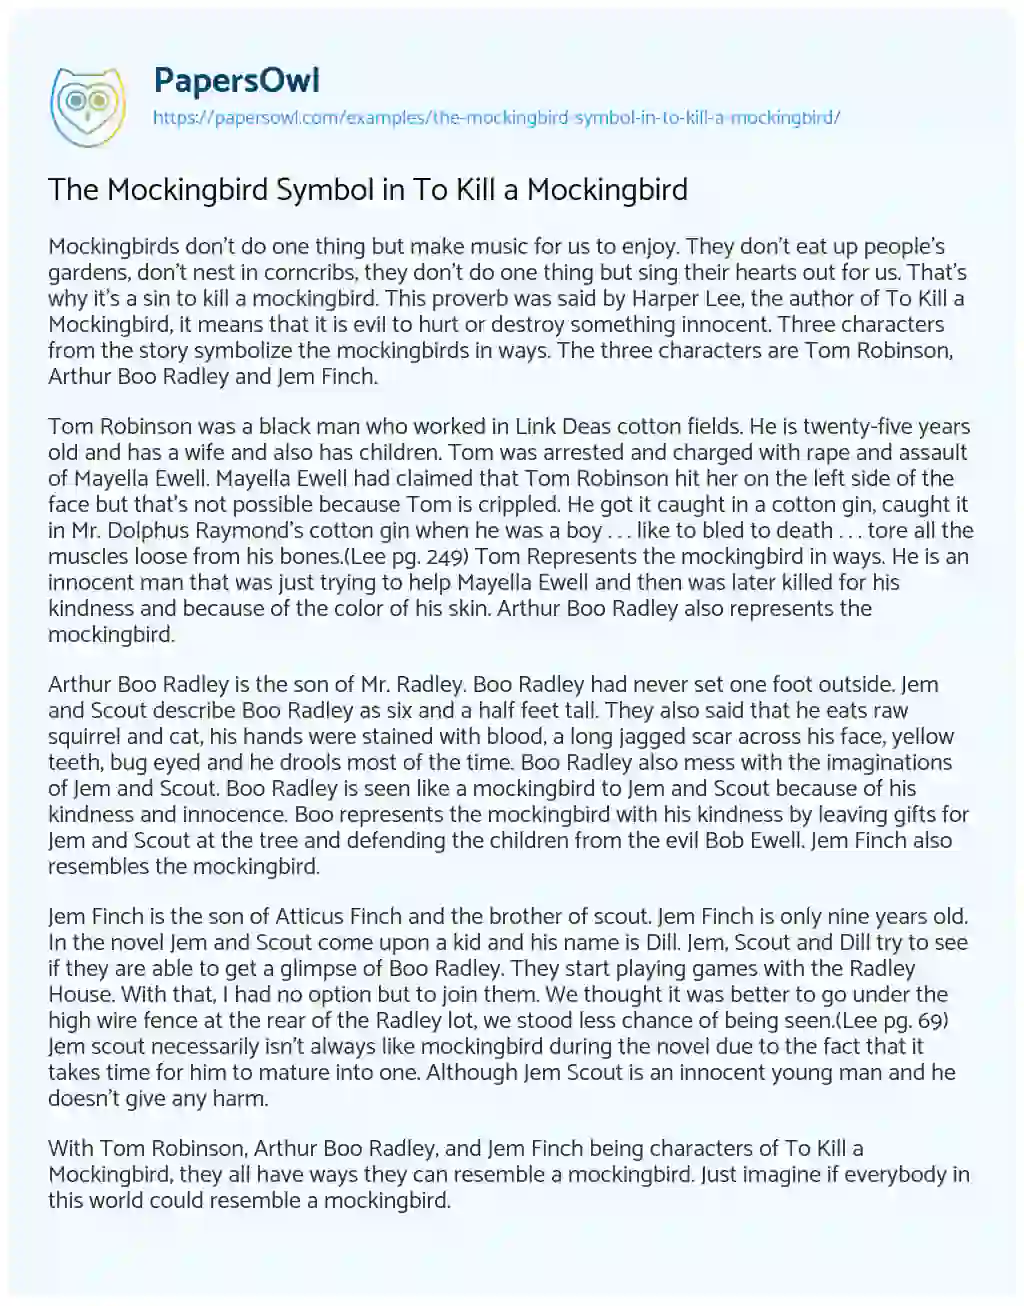 The Mockingbird Symbol in to Kill a Mockingbird essay